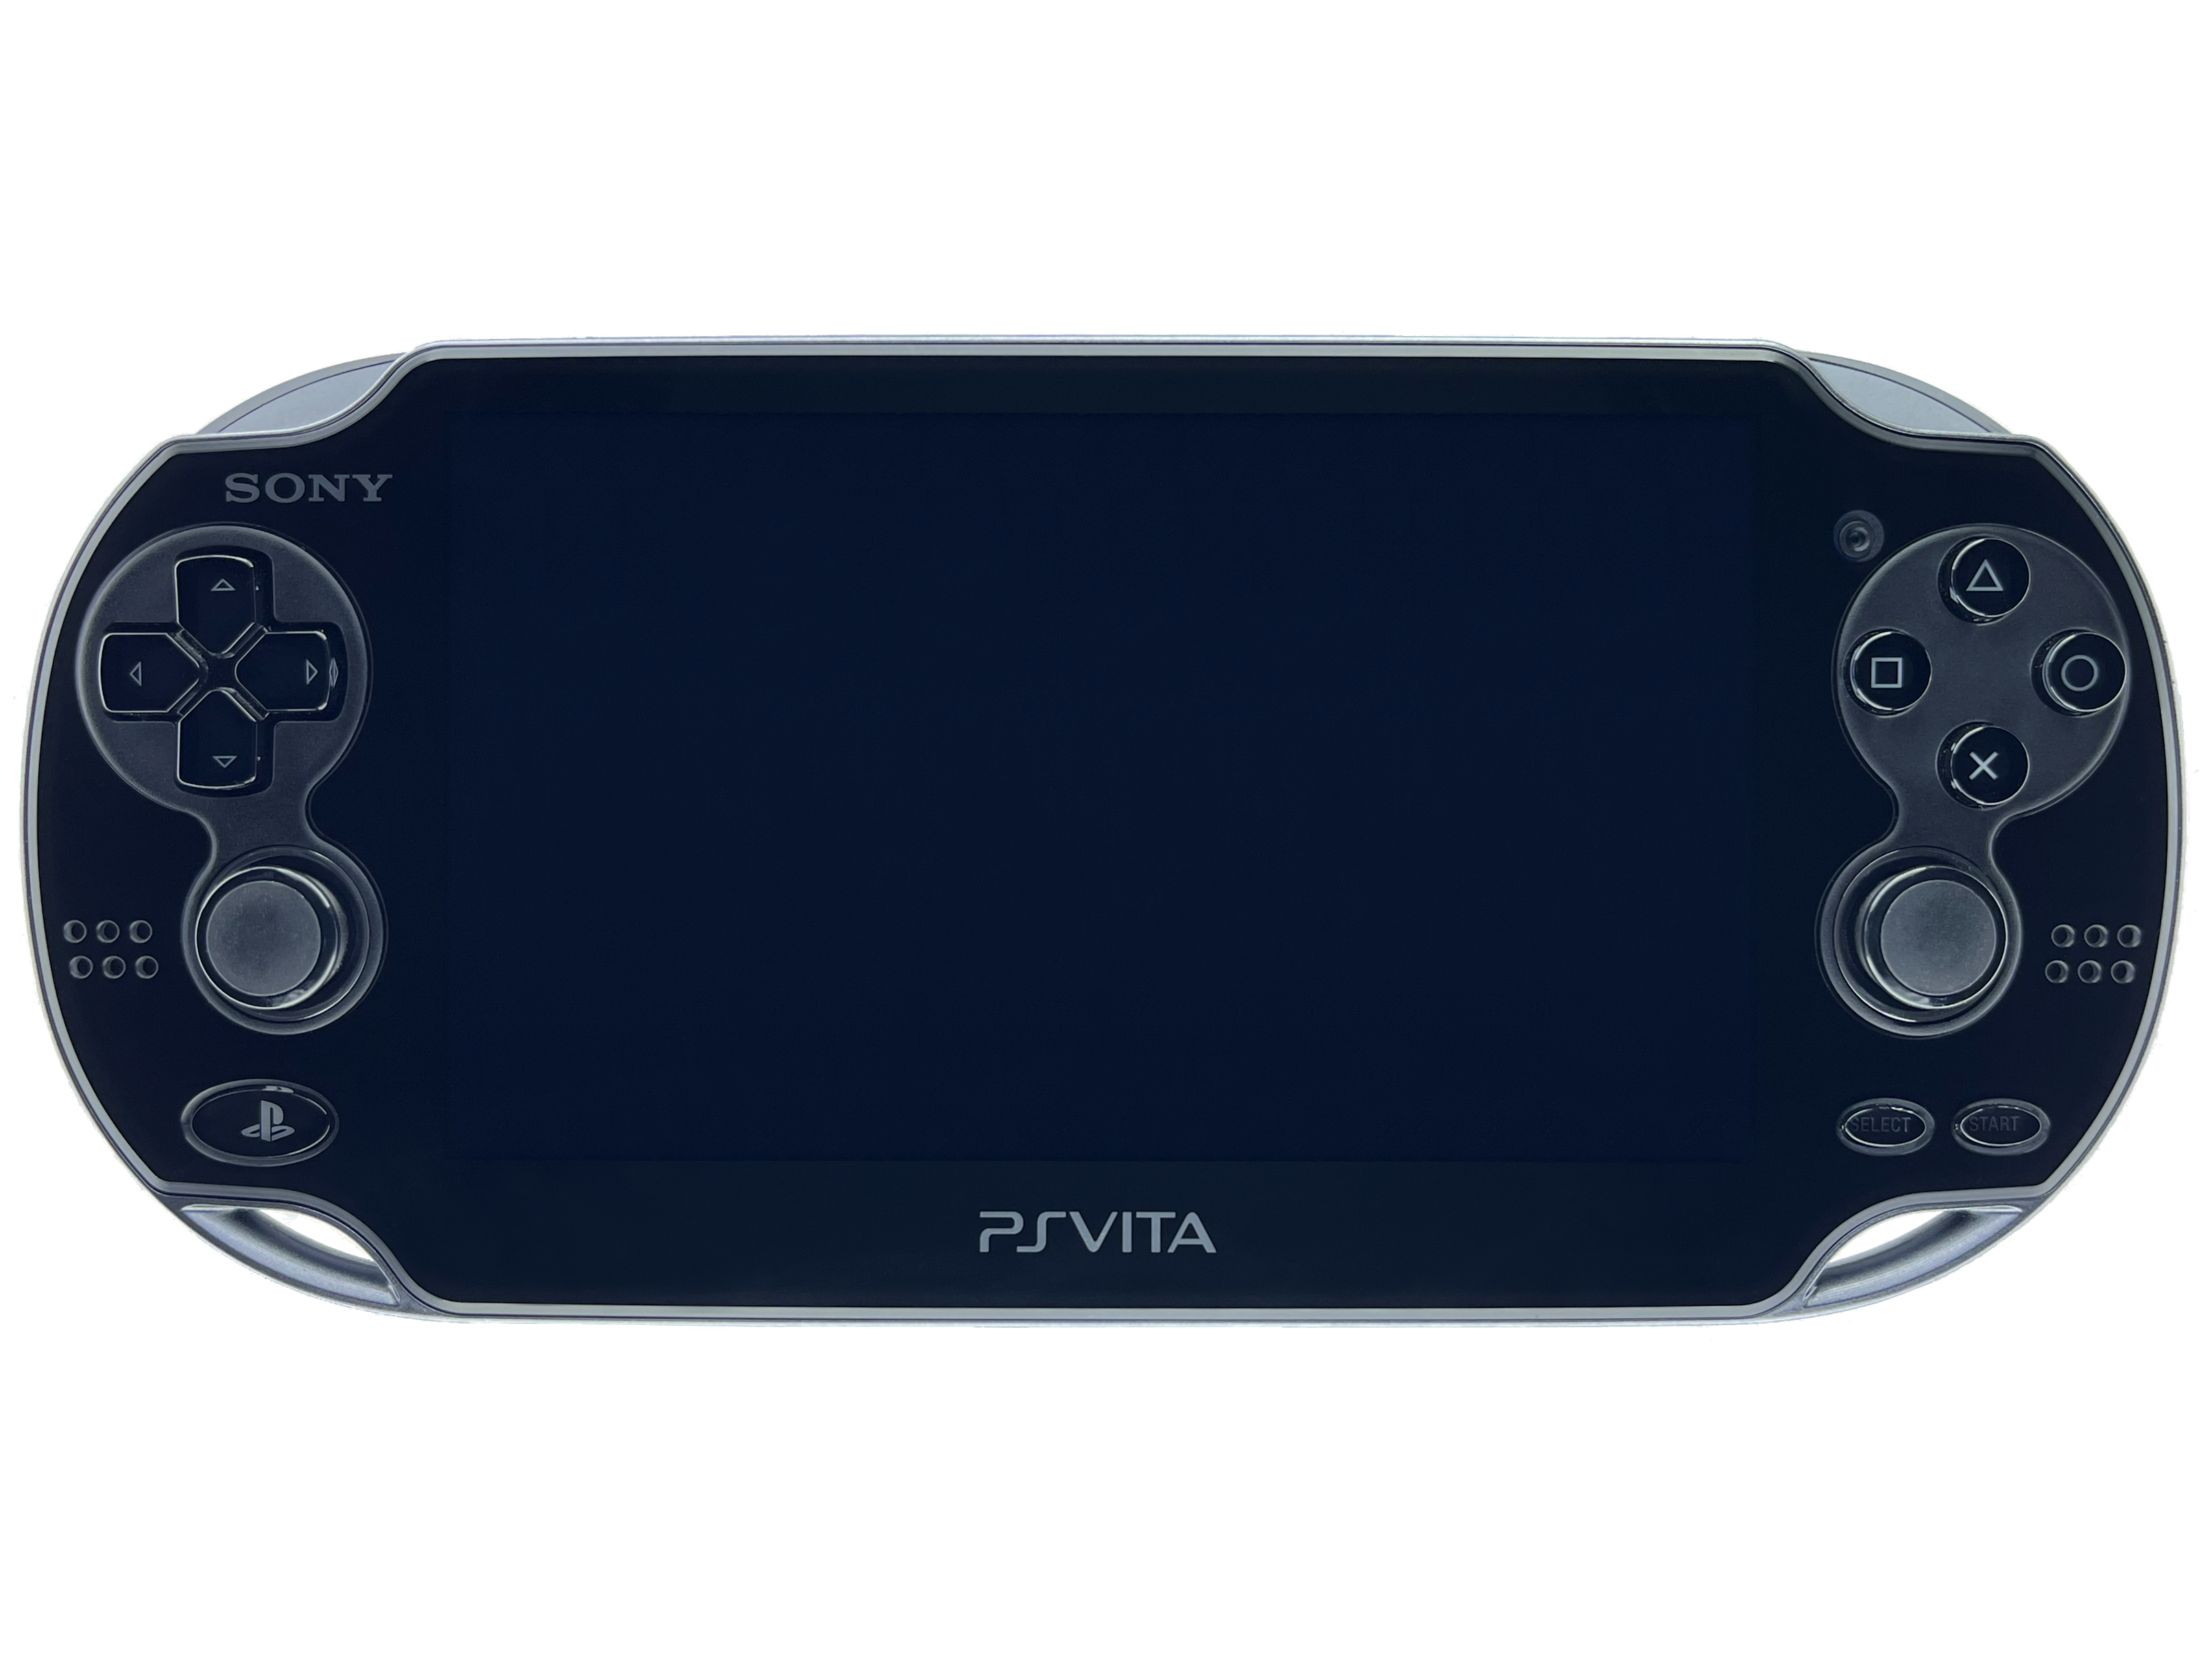  Sony PS Vita CEM-3000ND1 Prototype Console